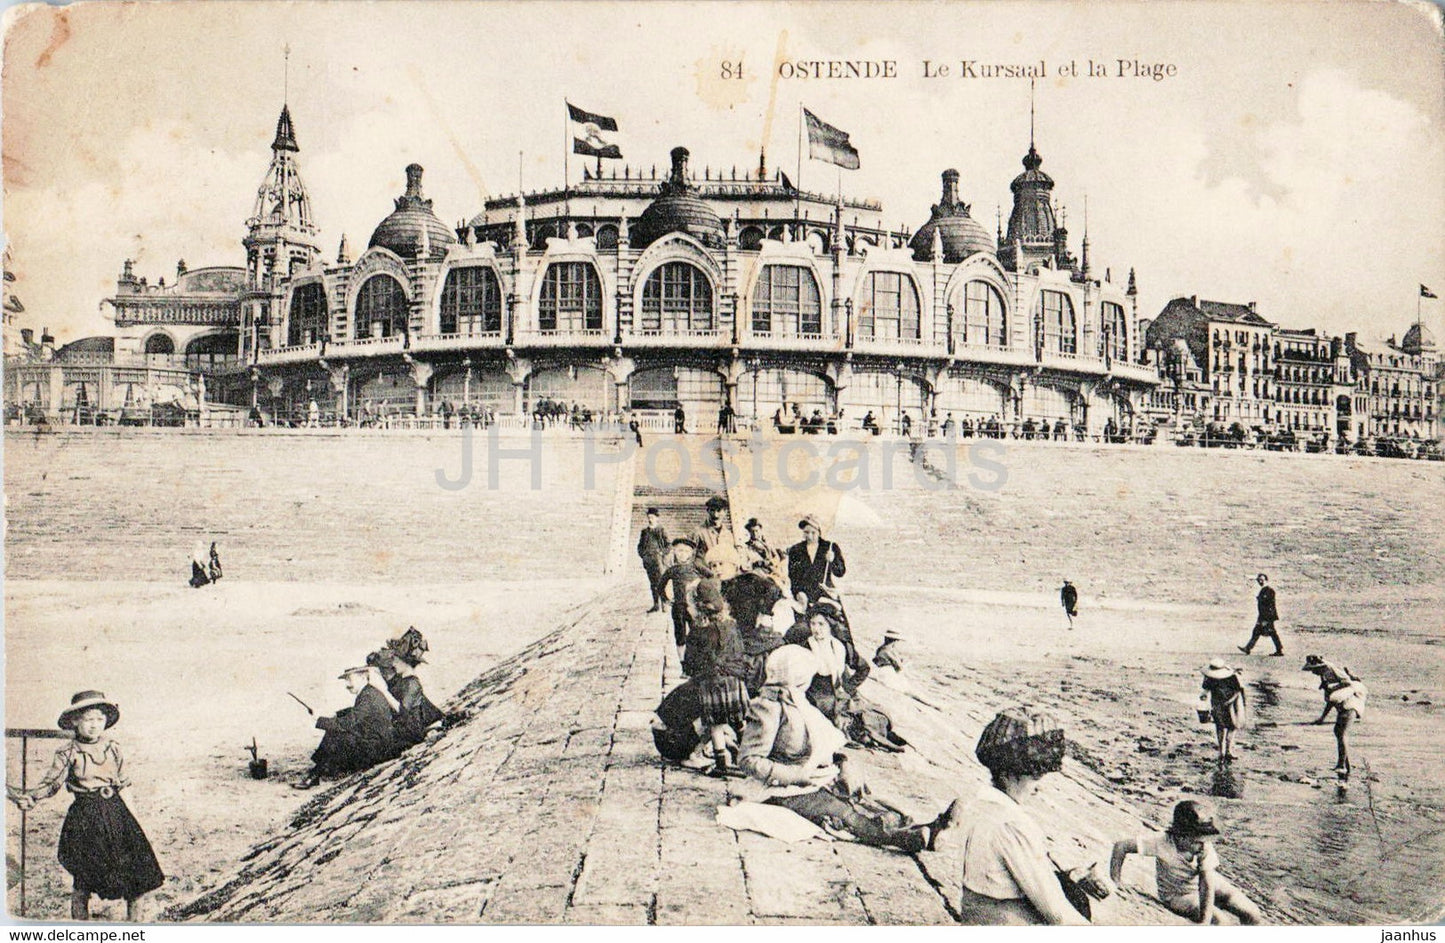 Ostende - Oostende - Le Kursaal et la Plage - beach - 84 - old postcard - 1919 - Belgium - used - JH Postcards